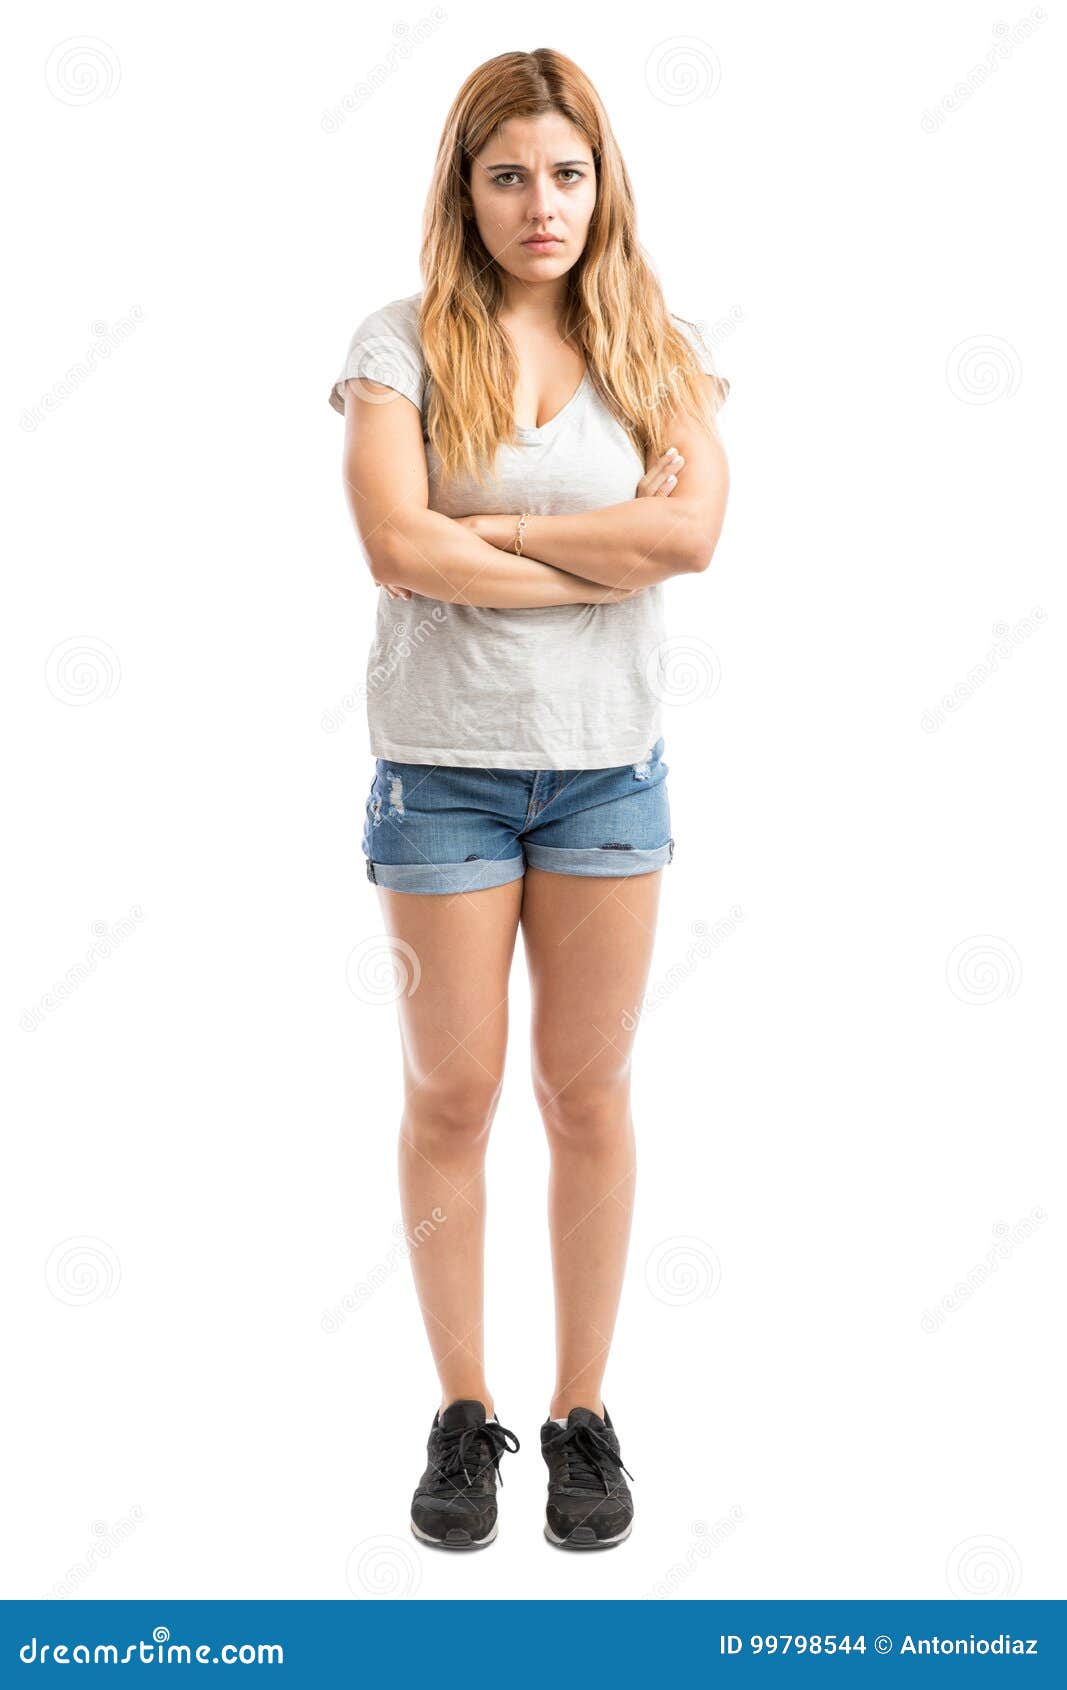 Woman looking upset stock photo. Image of people, angry - 99798544